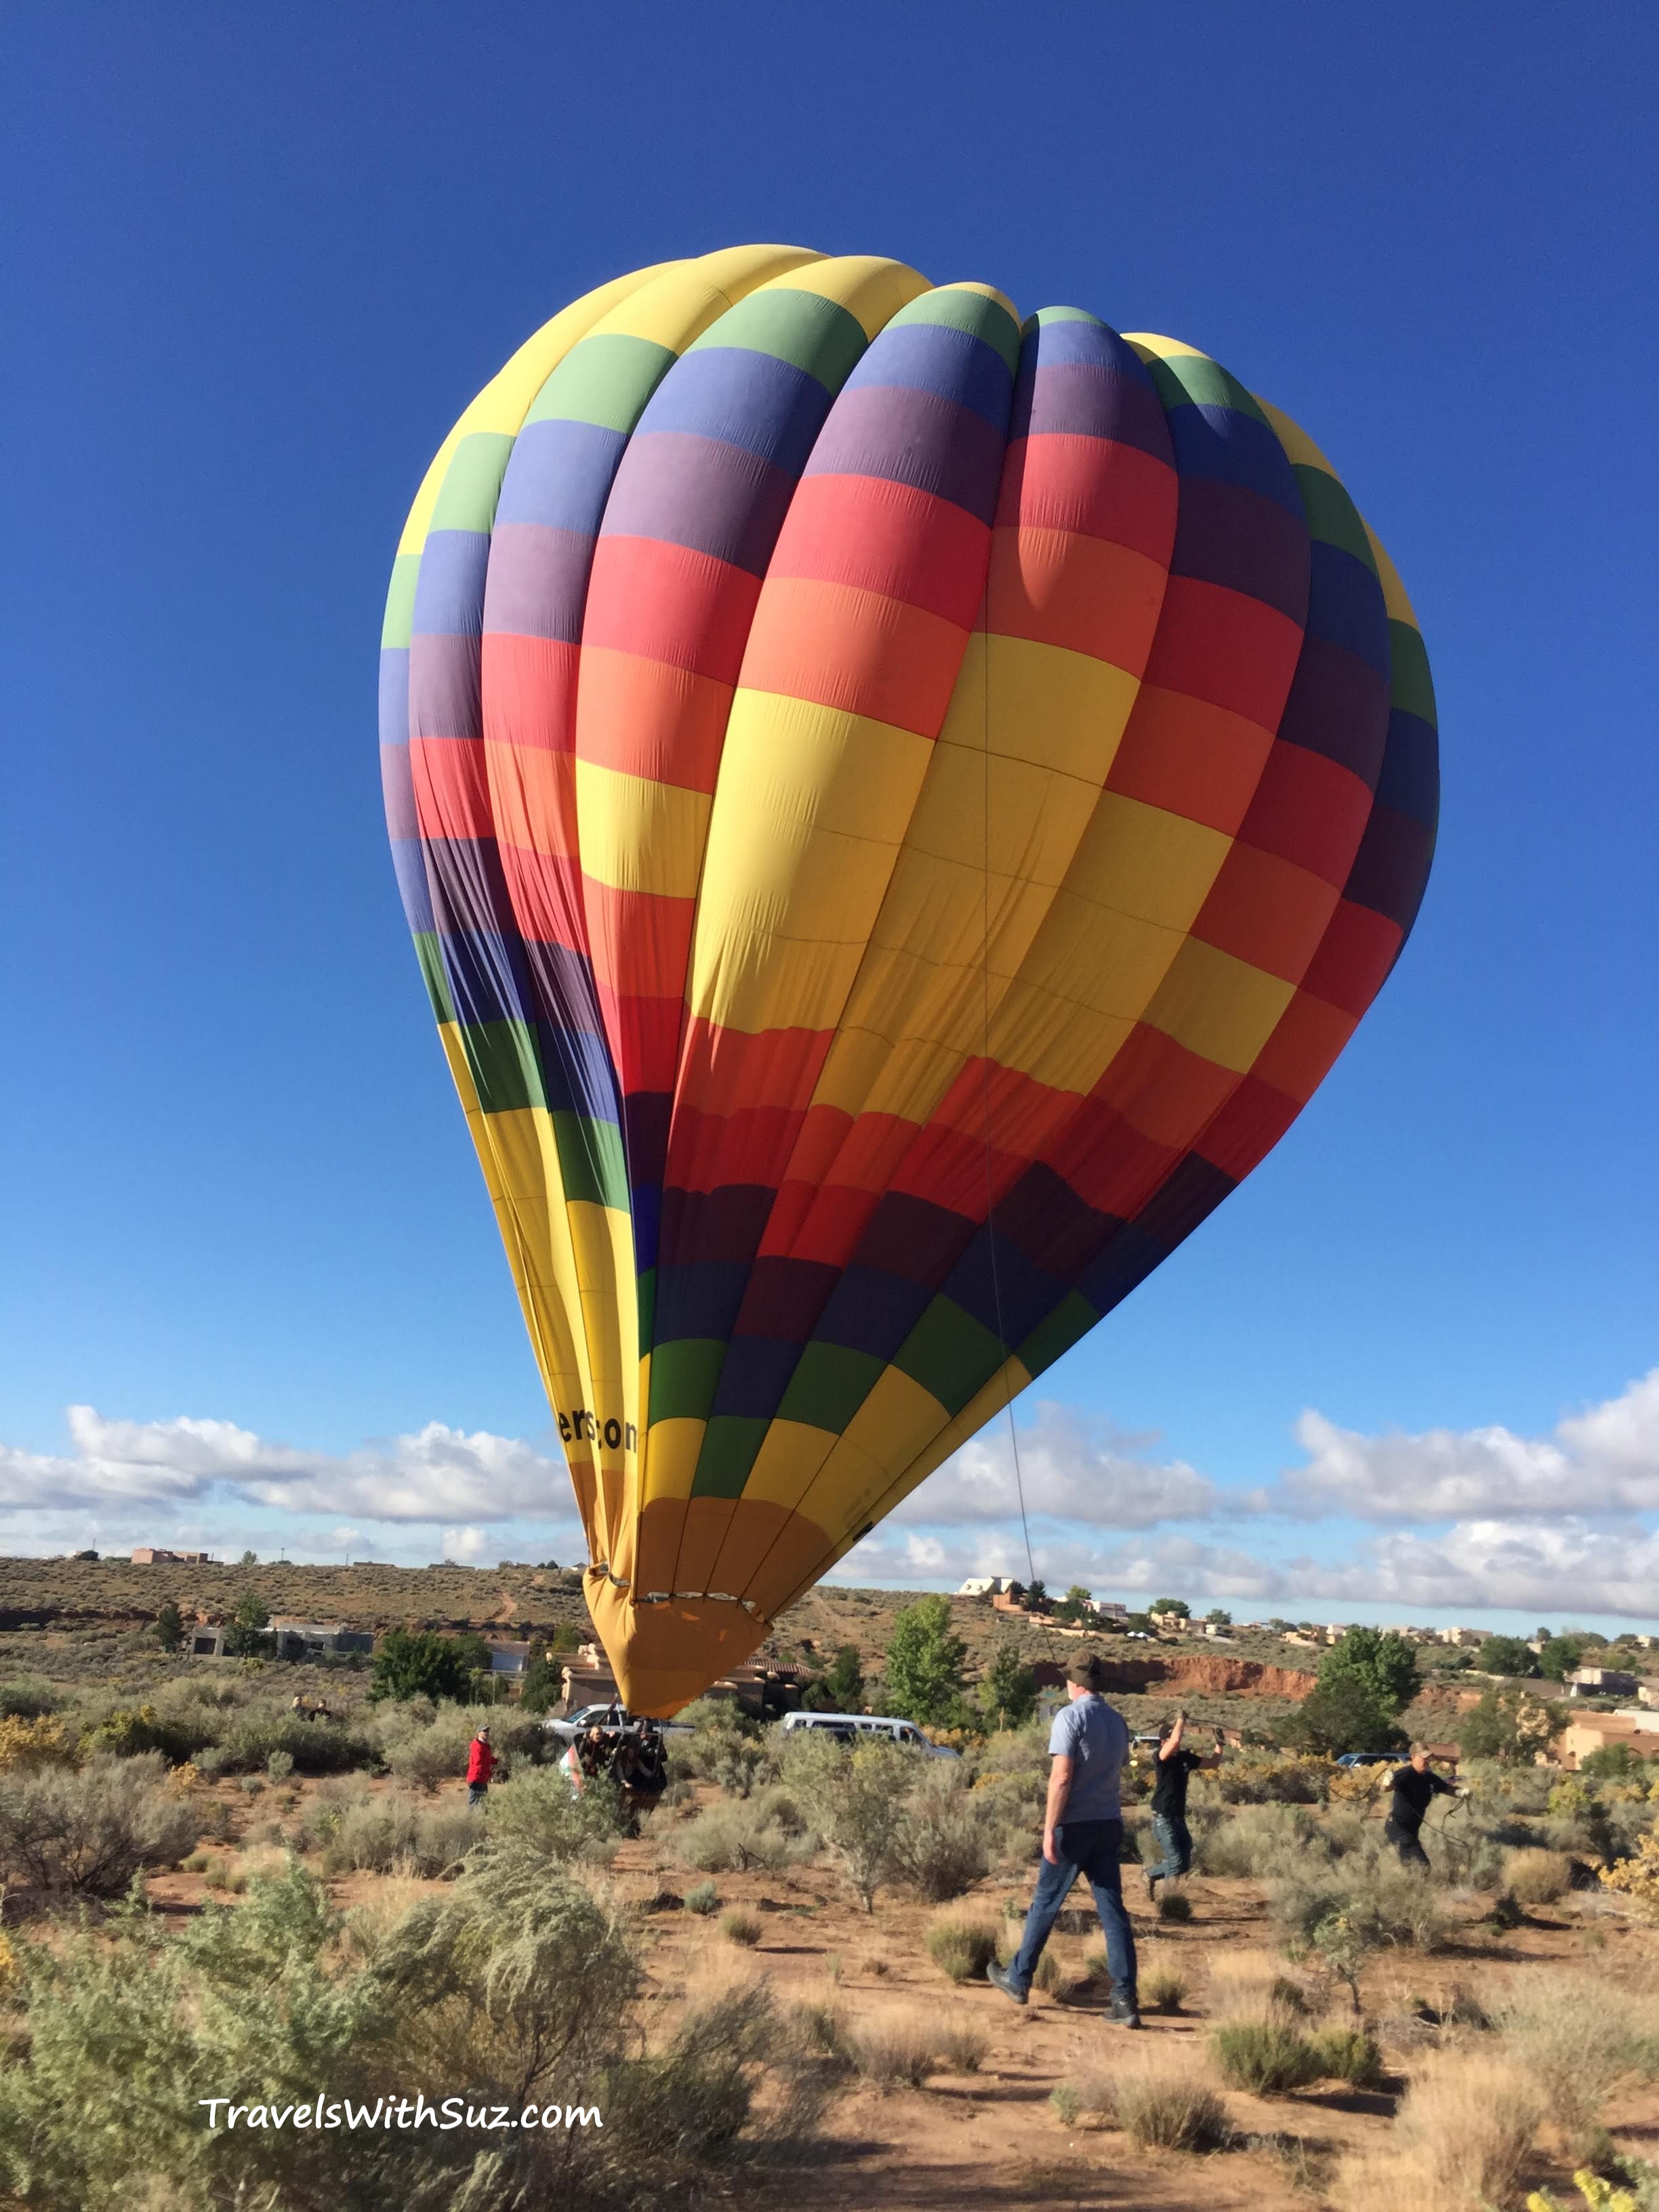 going soft - Albuquerque International Balloon Fiesta - TravelsWithSuz.com